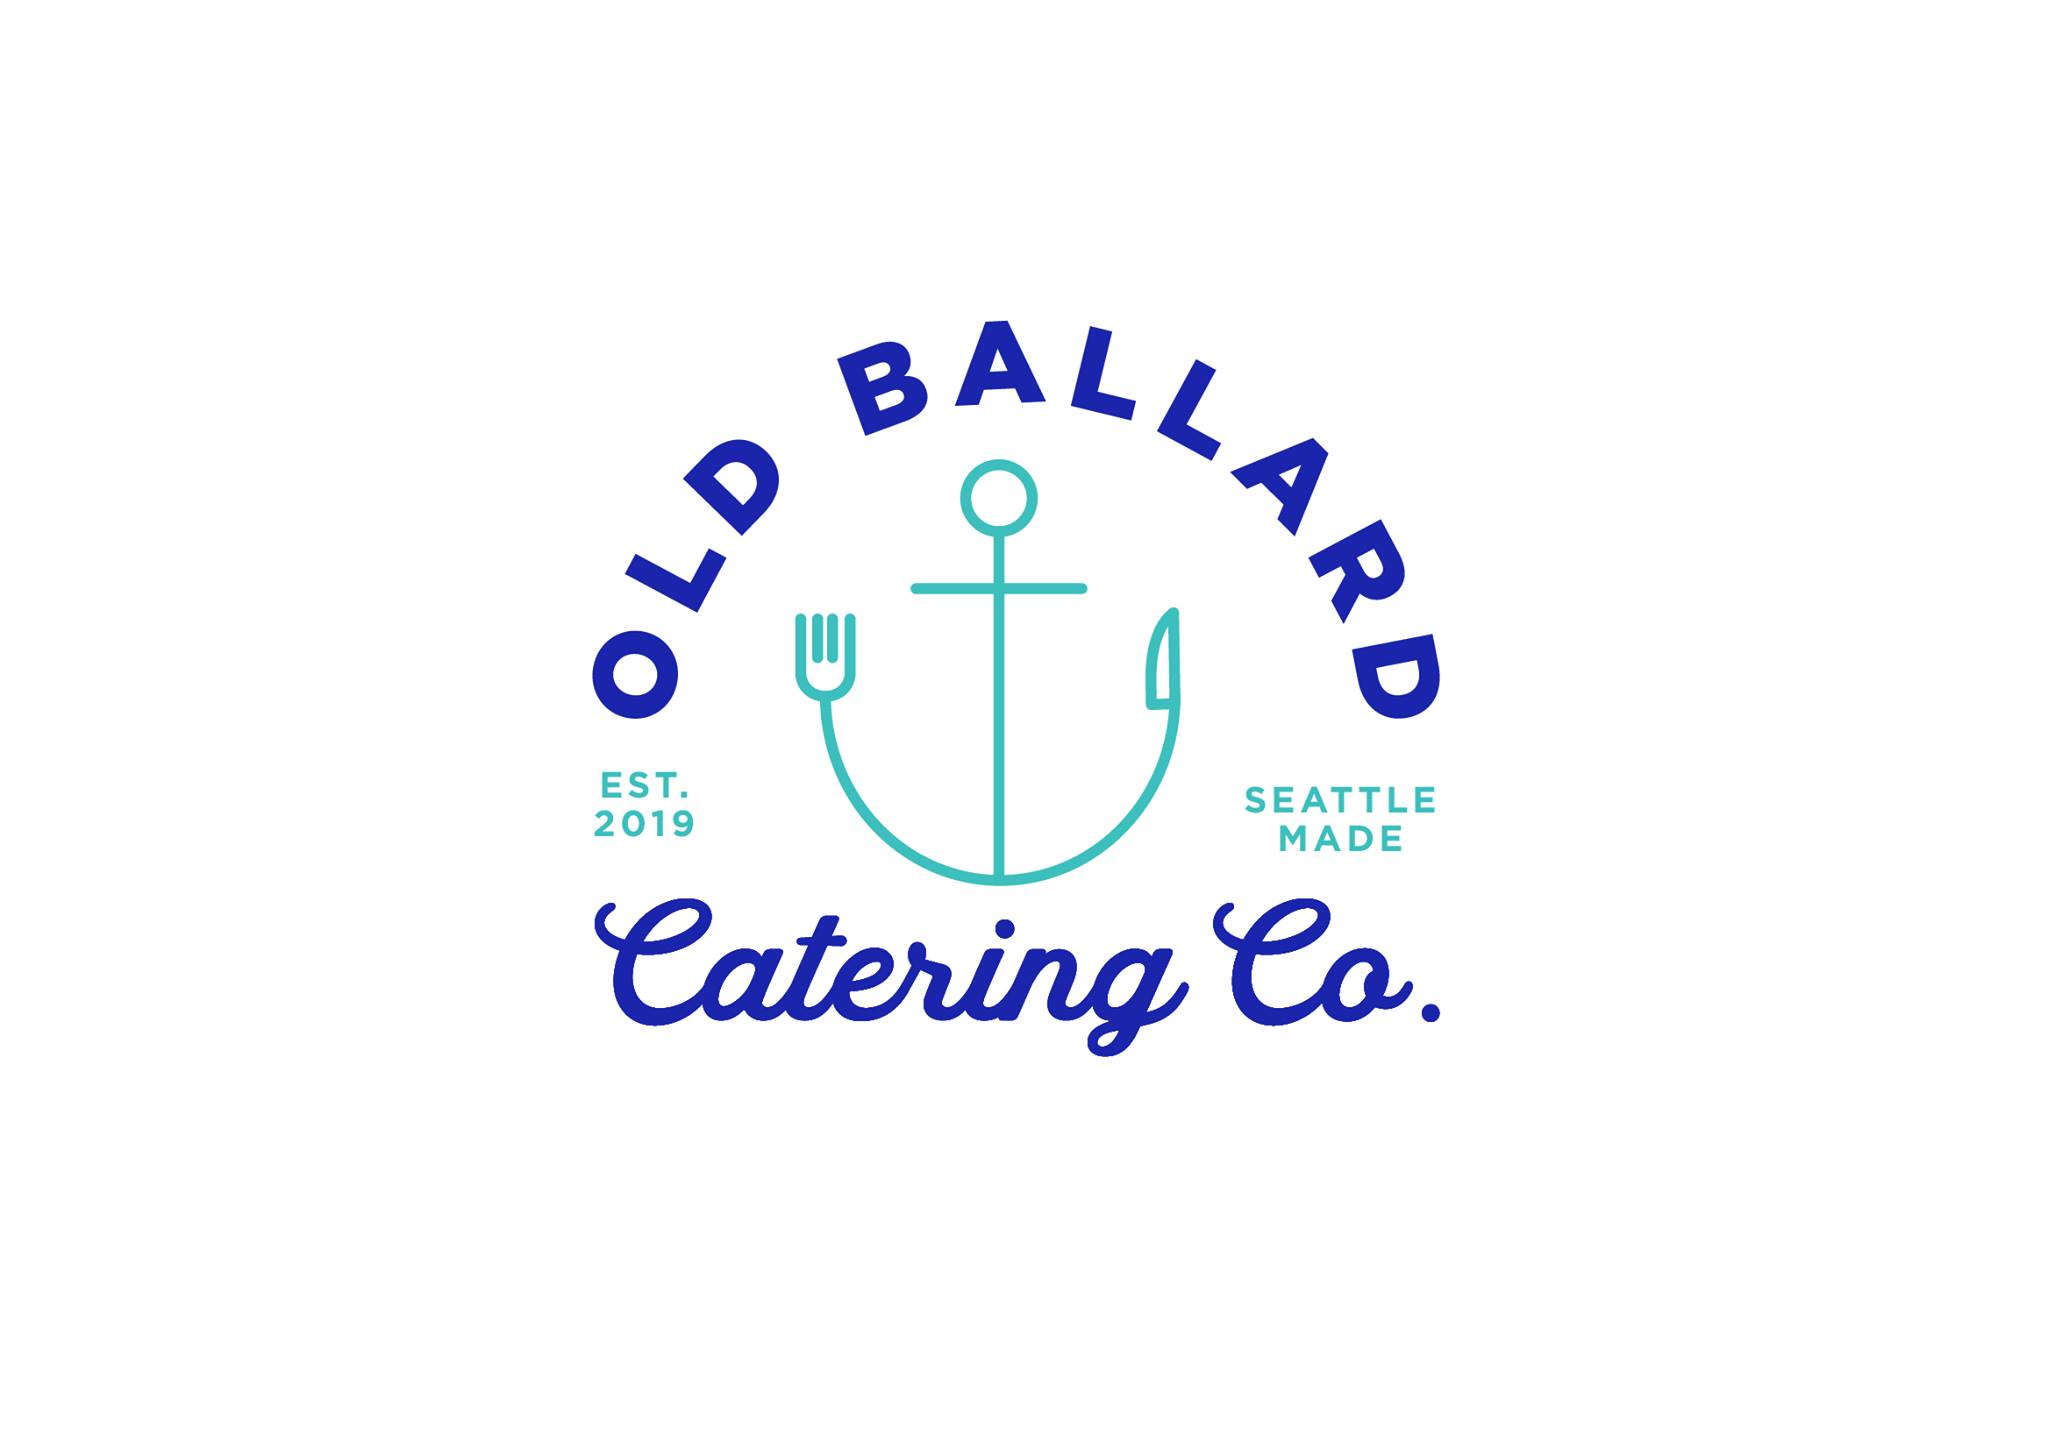 Old Ballard Catering Co.